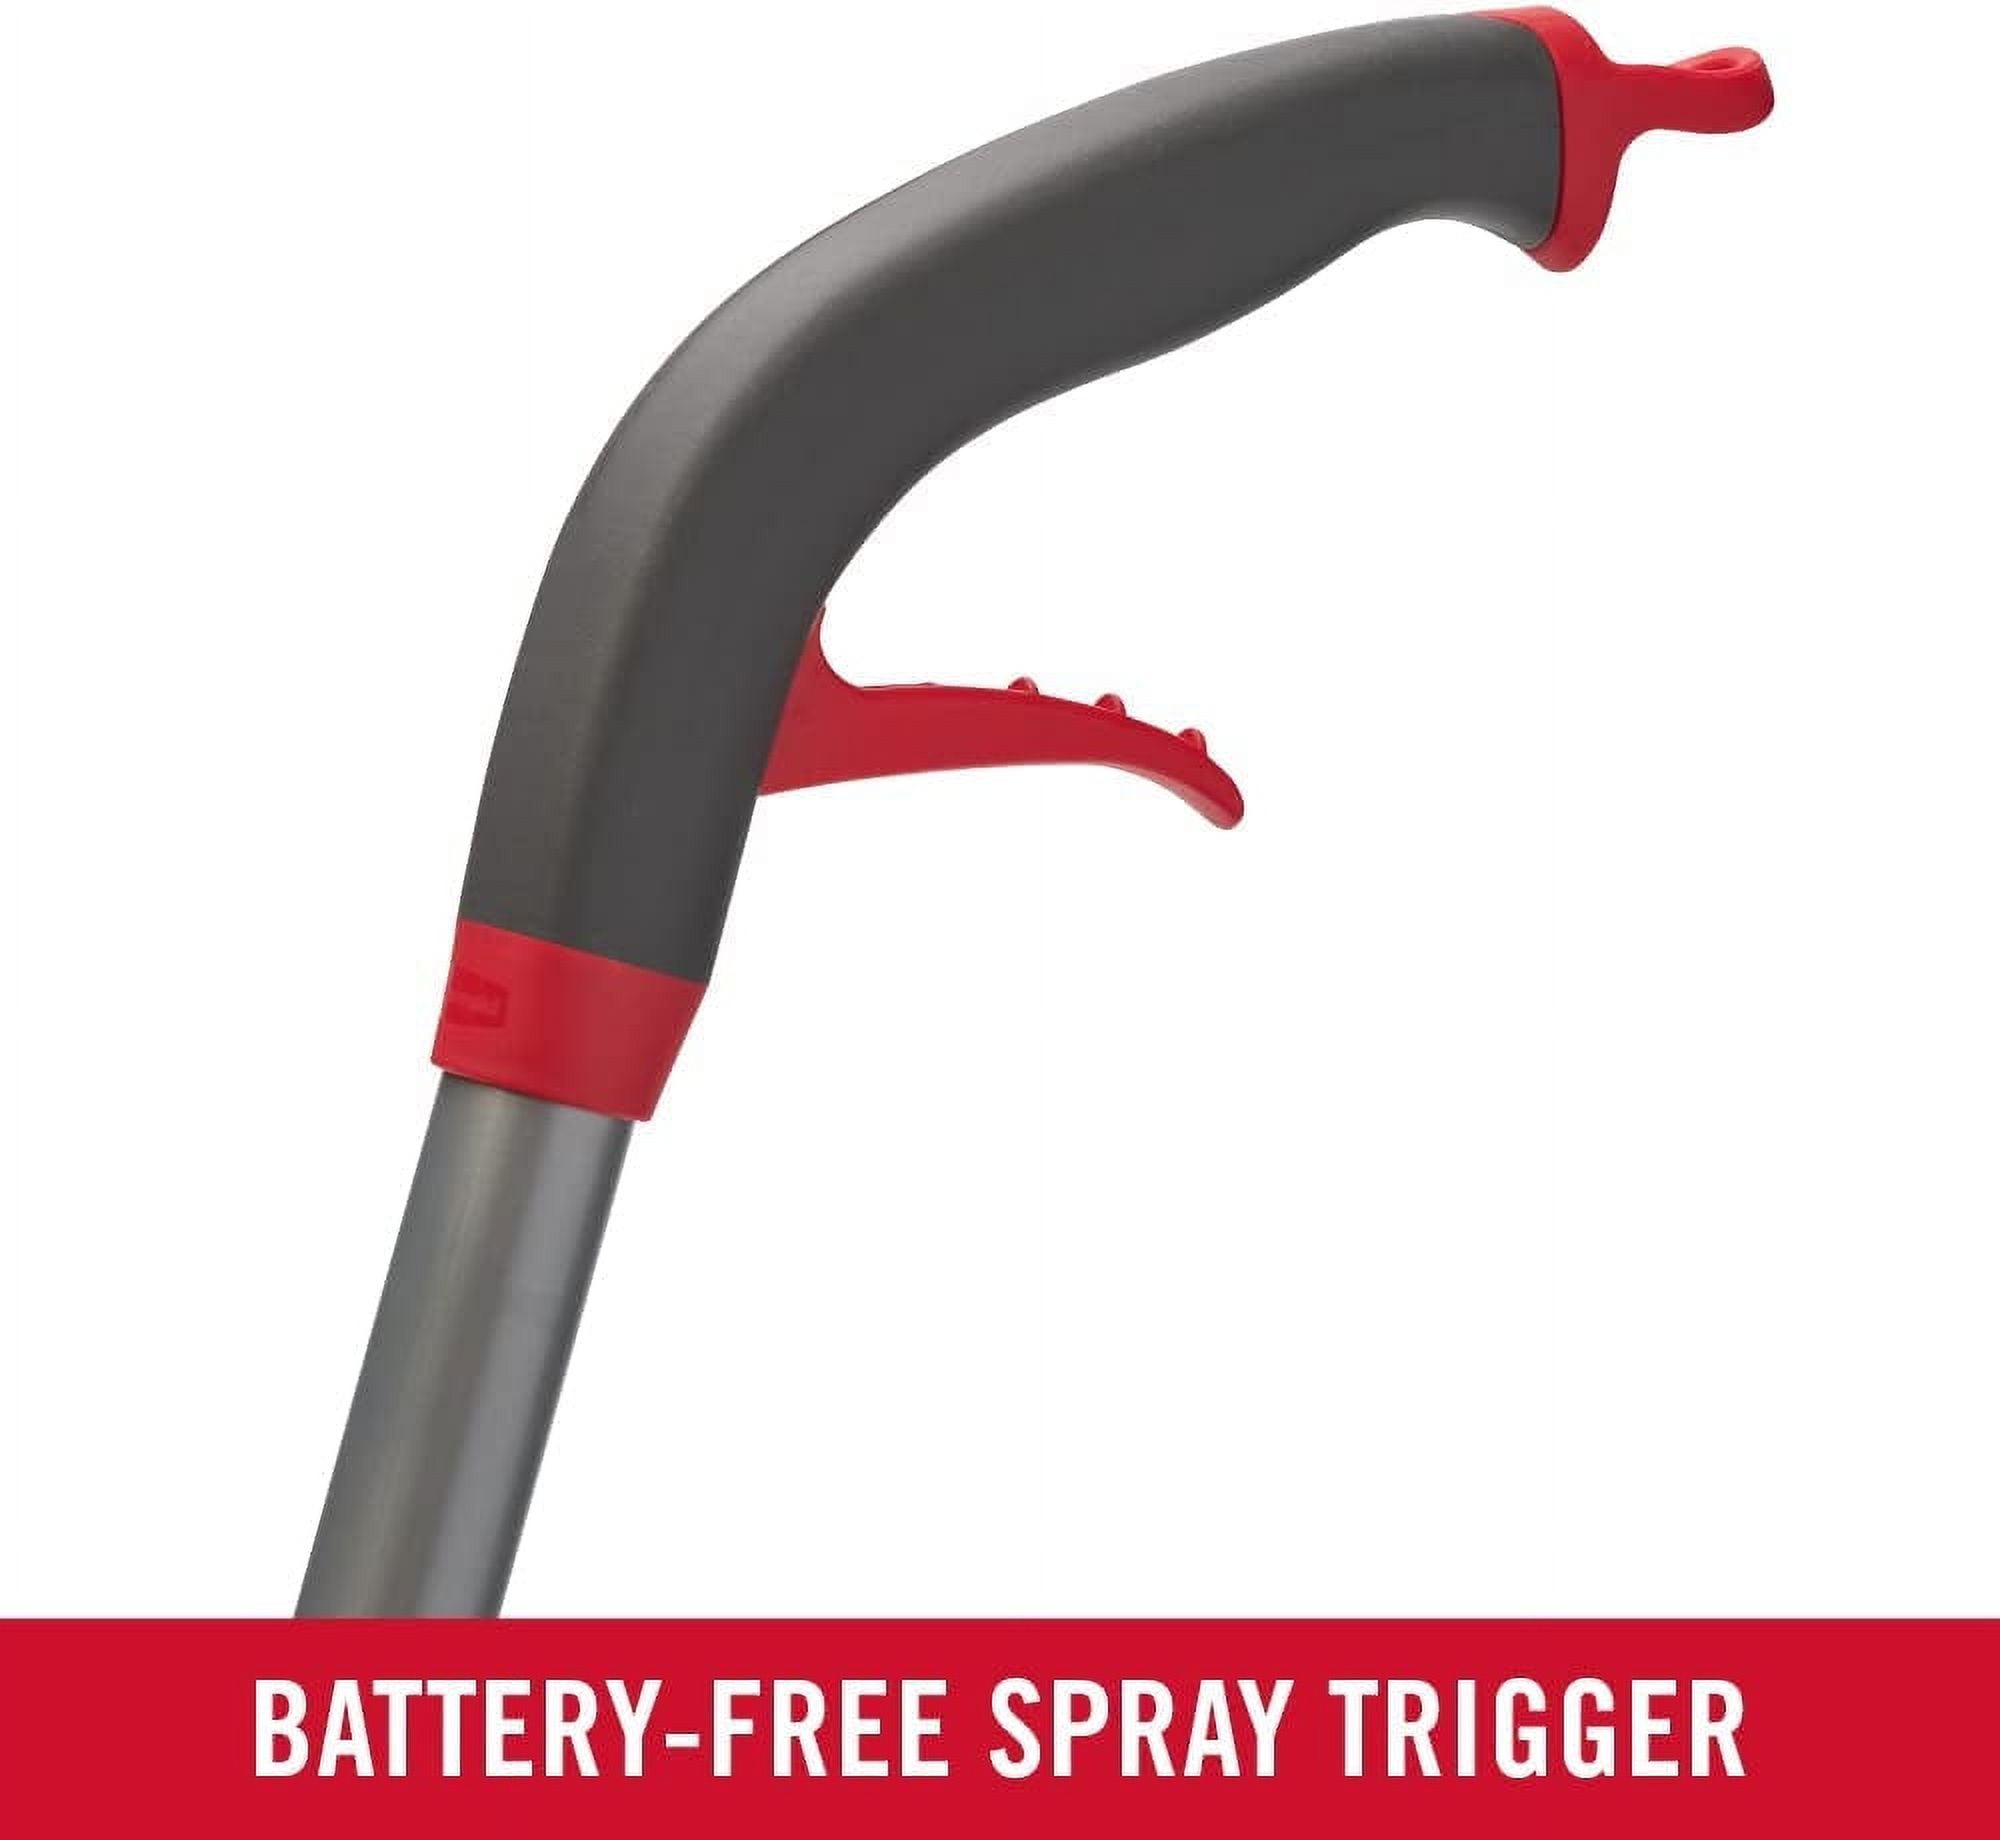 Reveal™ Microfiber Spray Mop